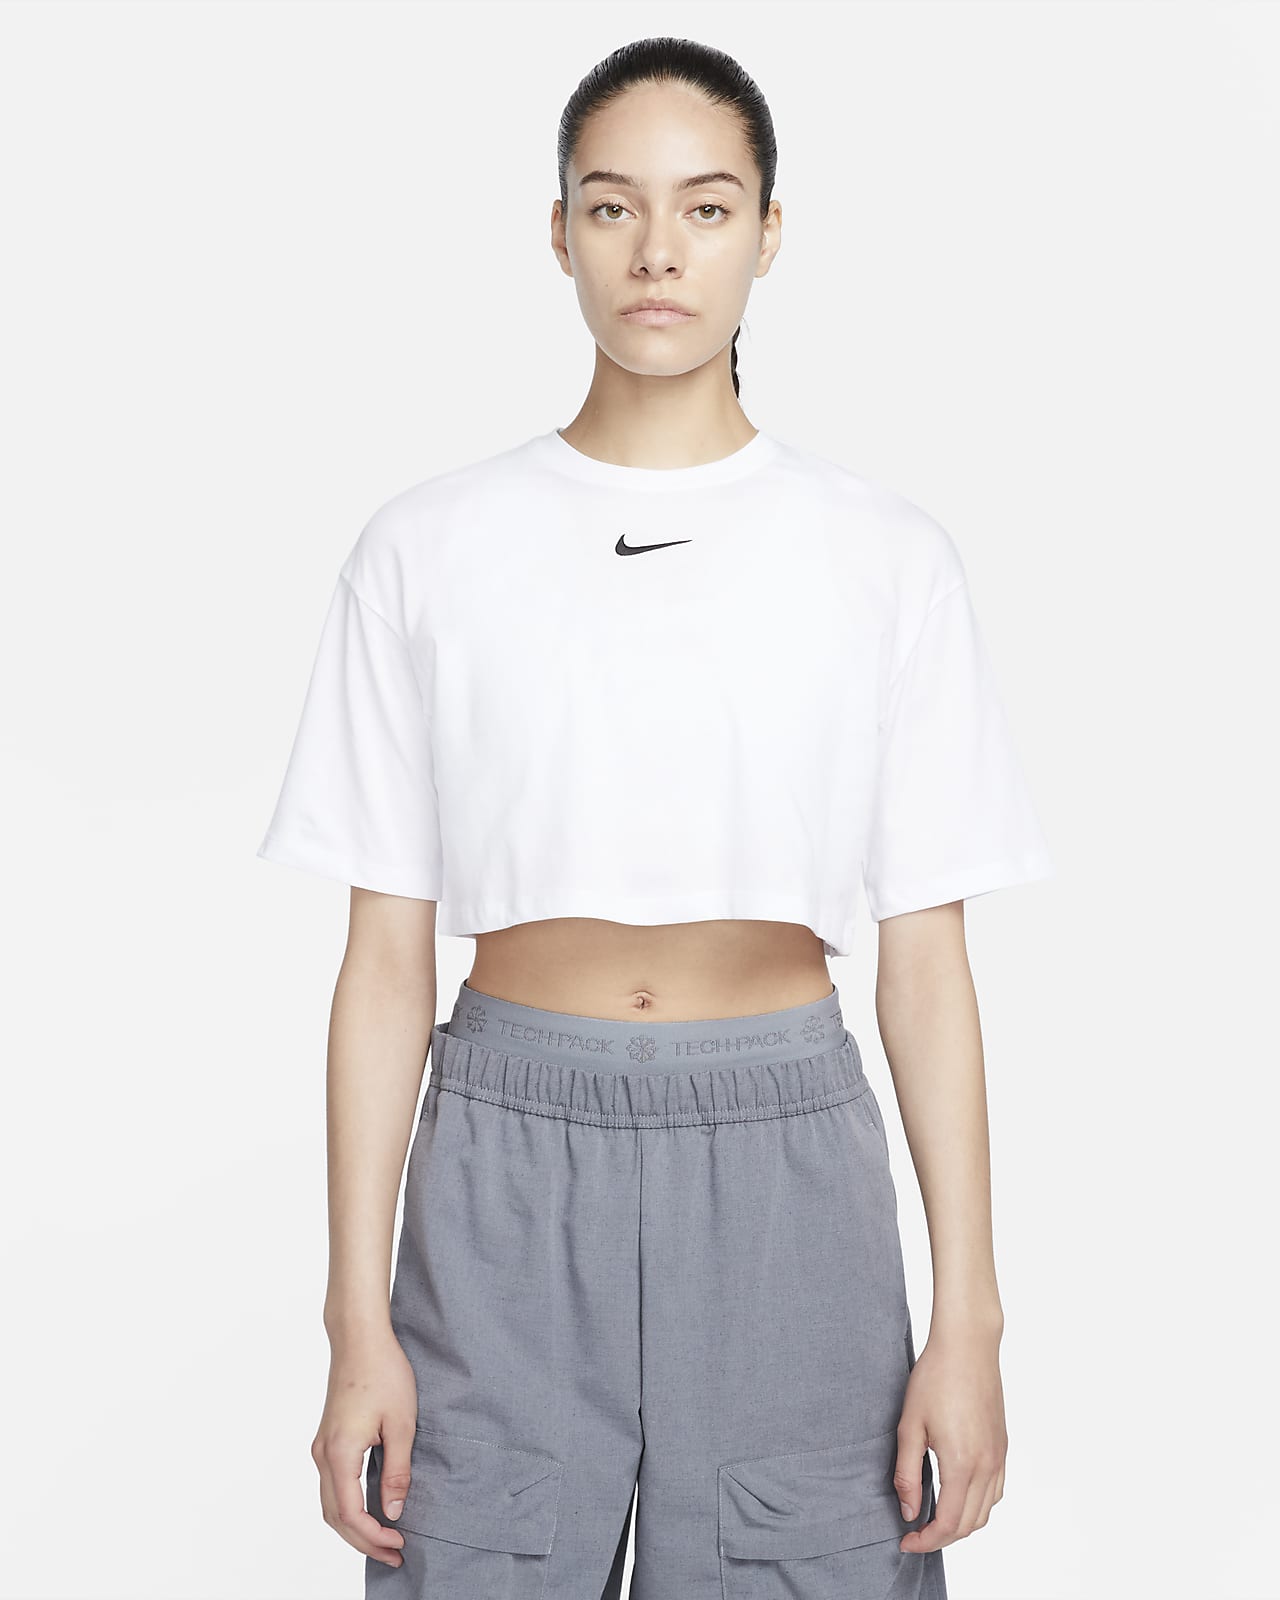 Kort Nike Sportswear-T-shirt til kvinder